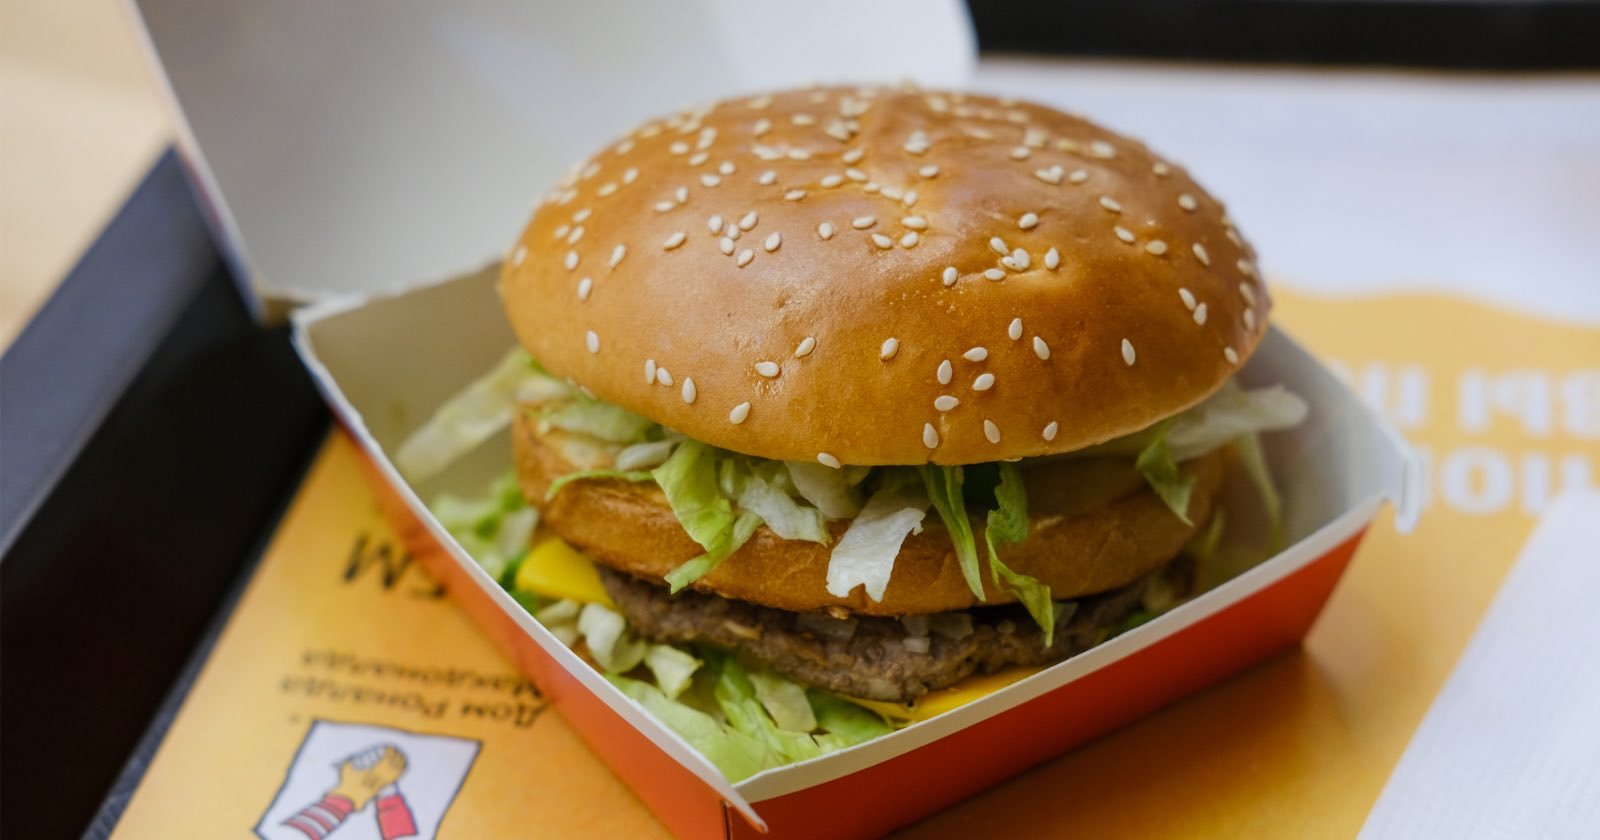  mcdonald wendy win lawsuit over size burgers 